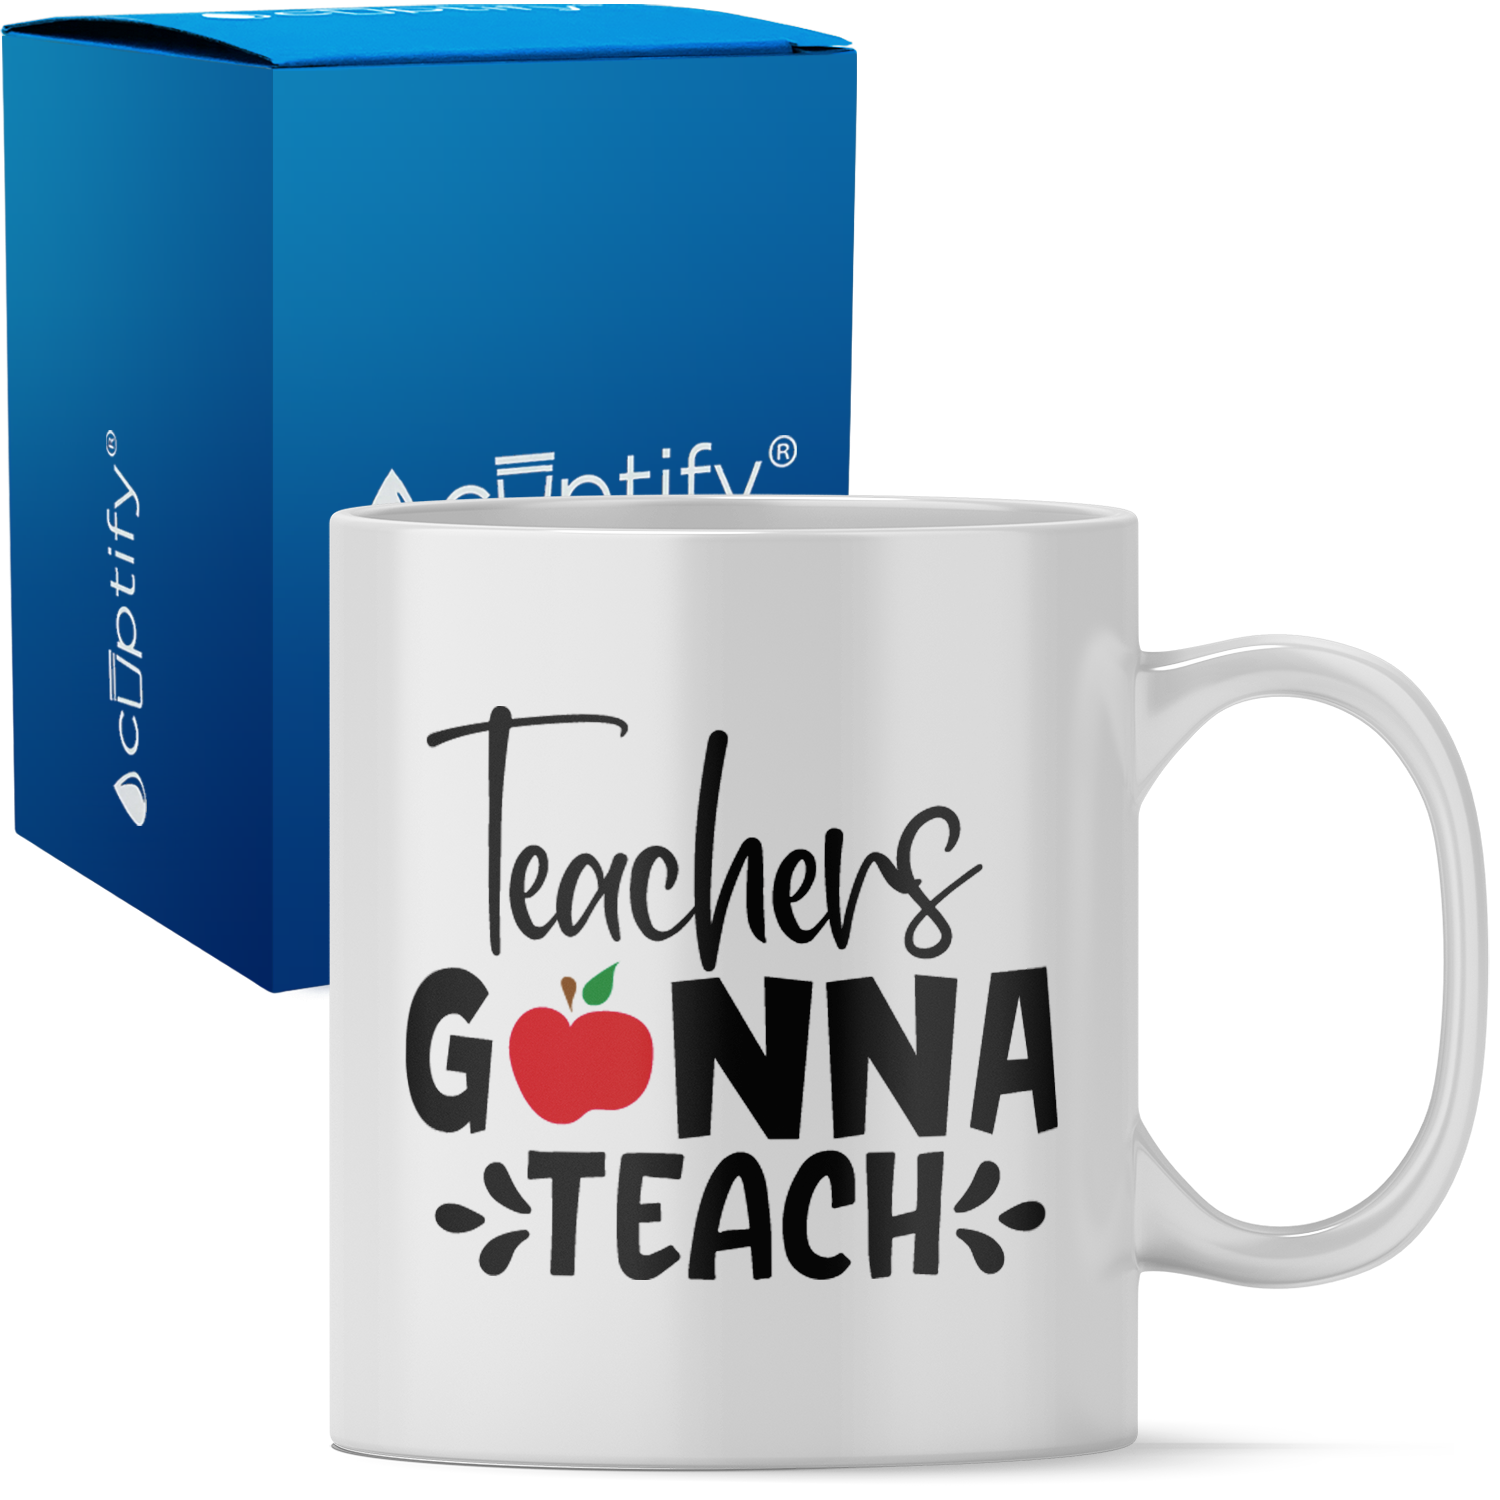 Teachers Gonna Teach 11oz Ceramic Coffee Mug